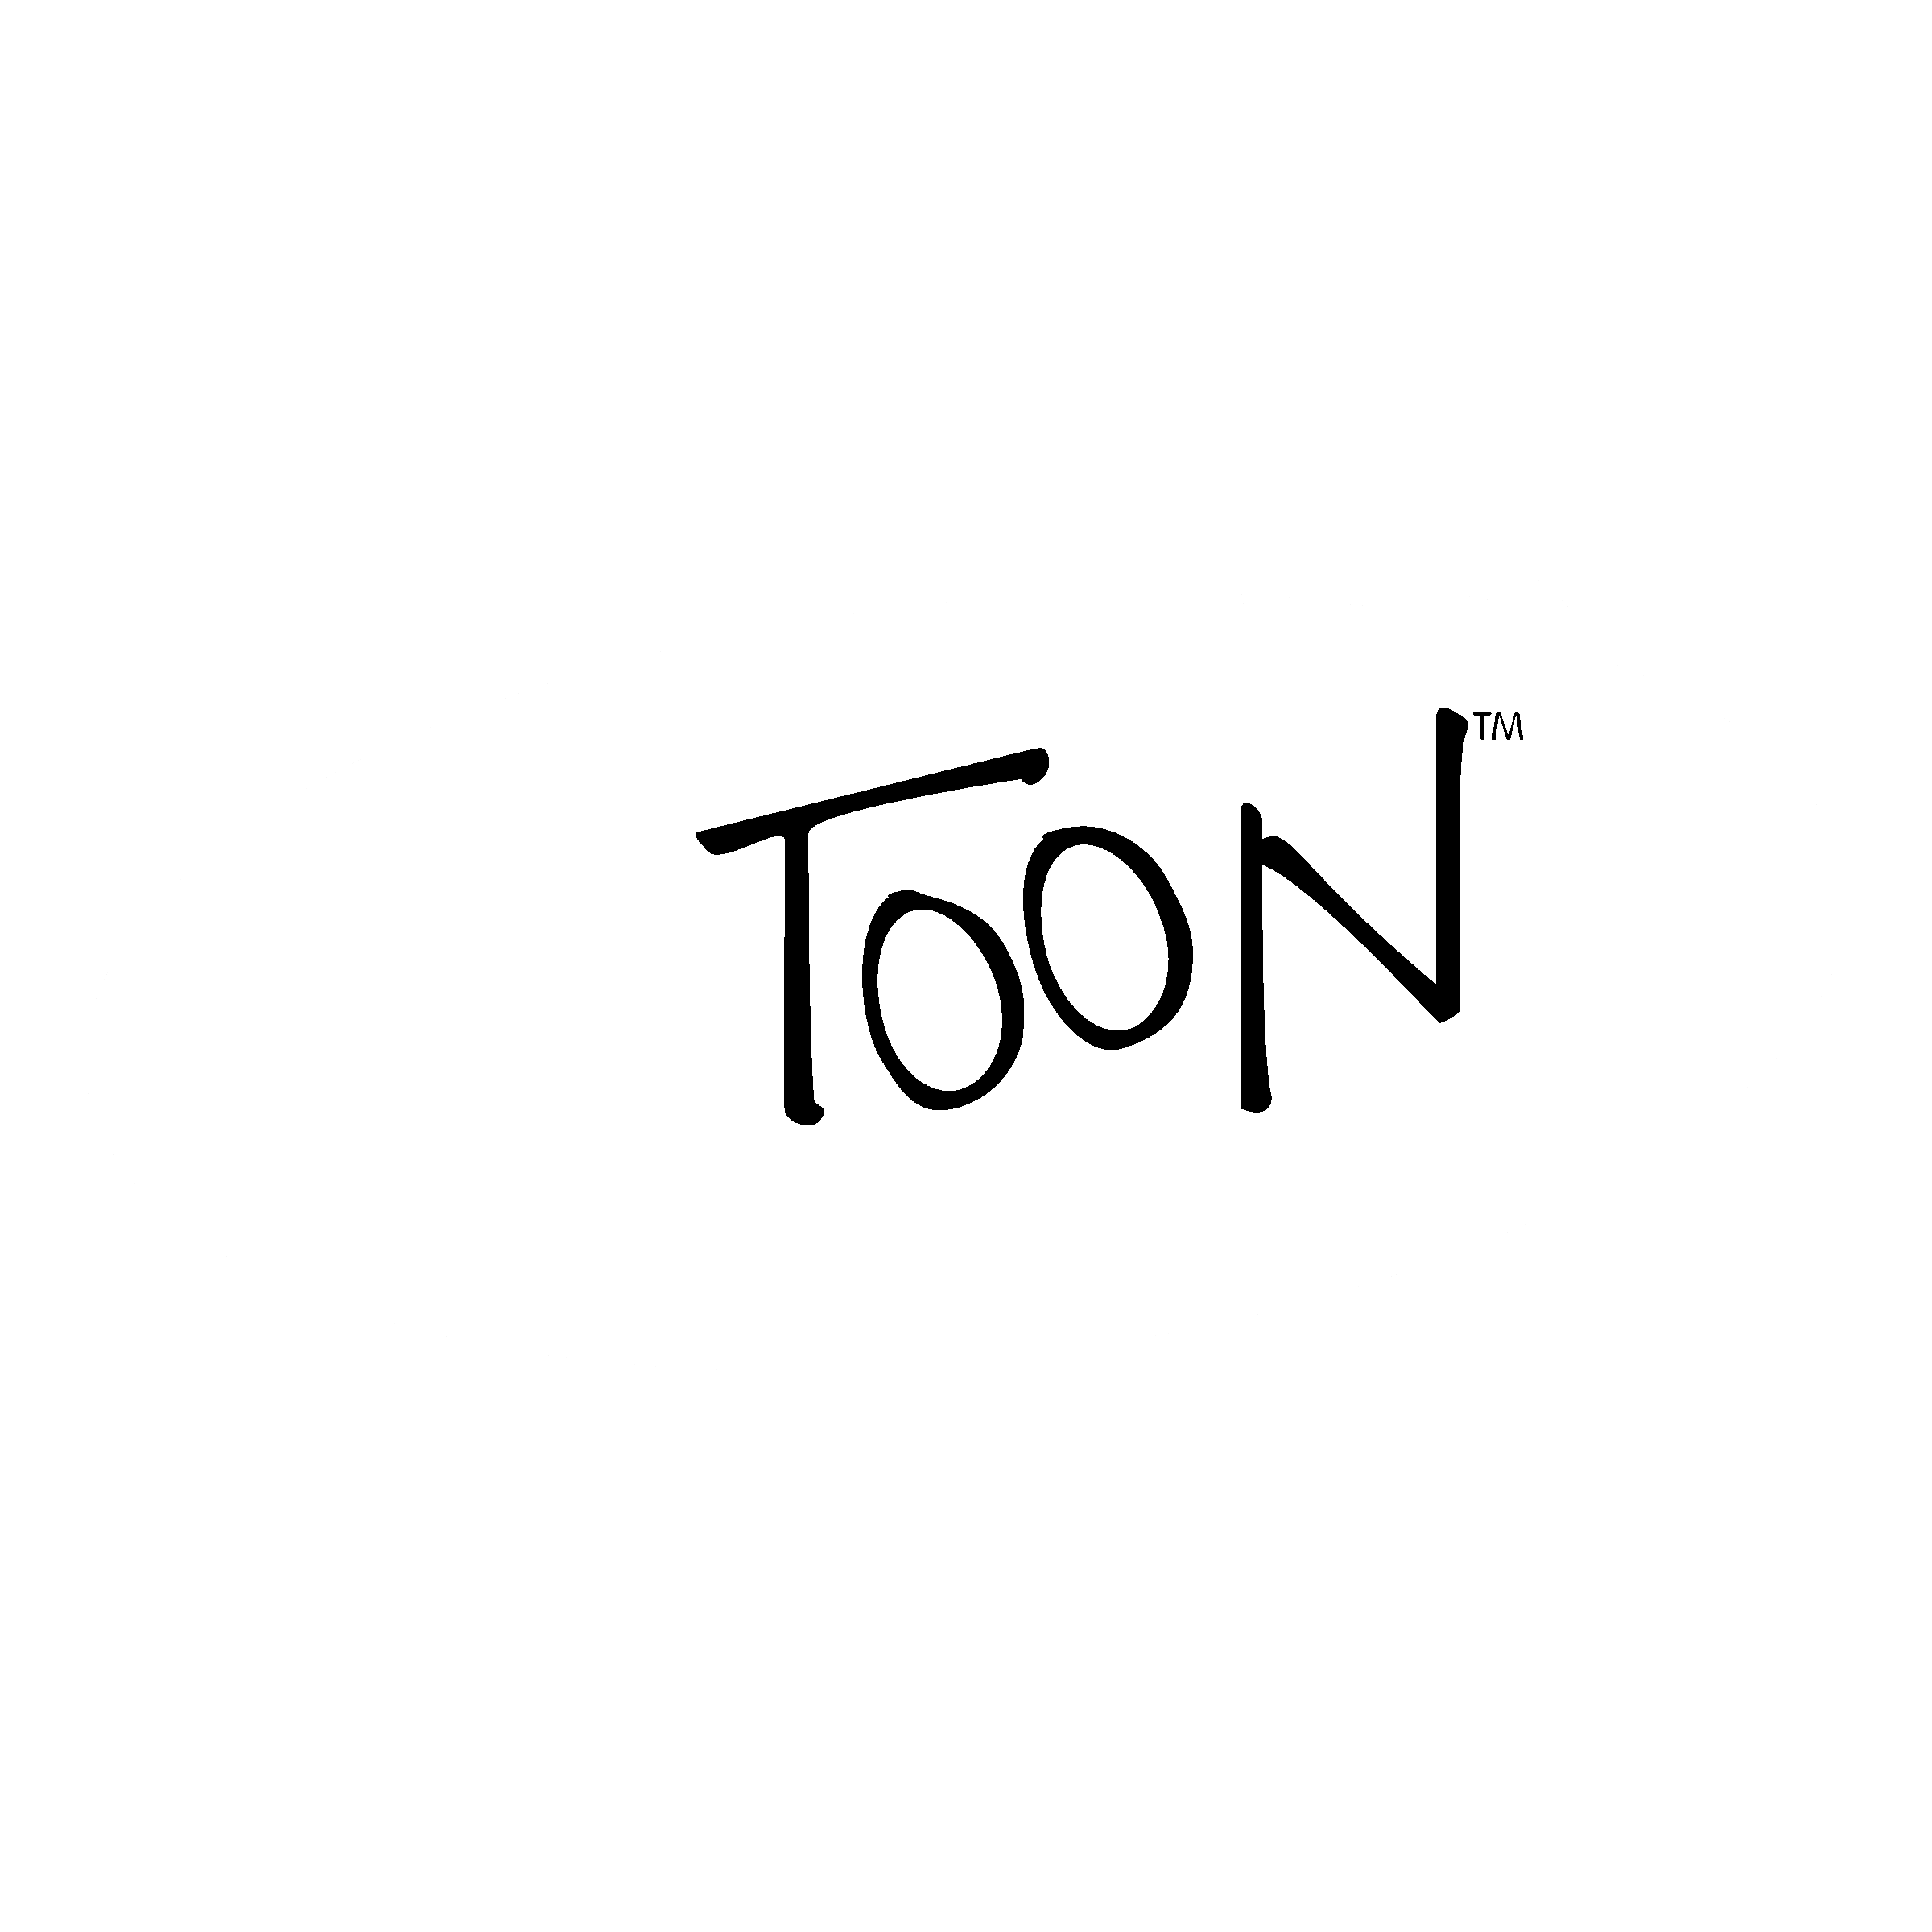 Teletoon Logo - Teletoon Logo PNG Transparent & SVG Vector